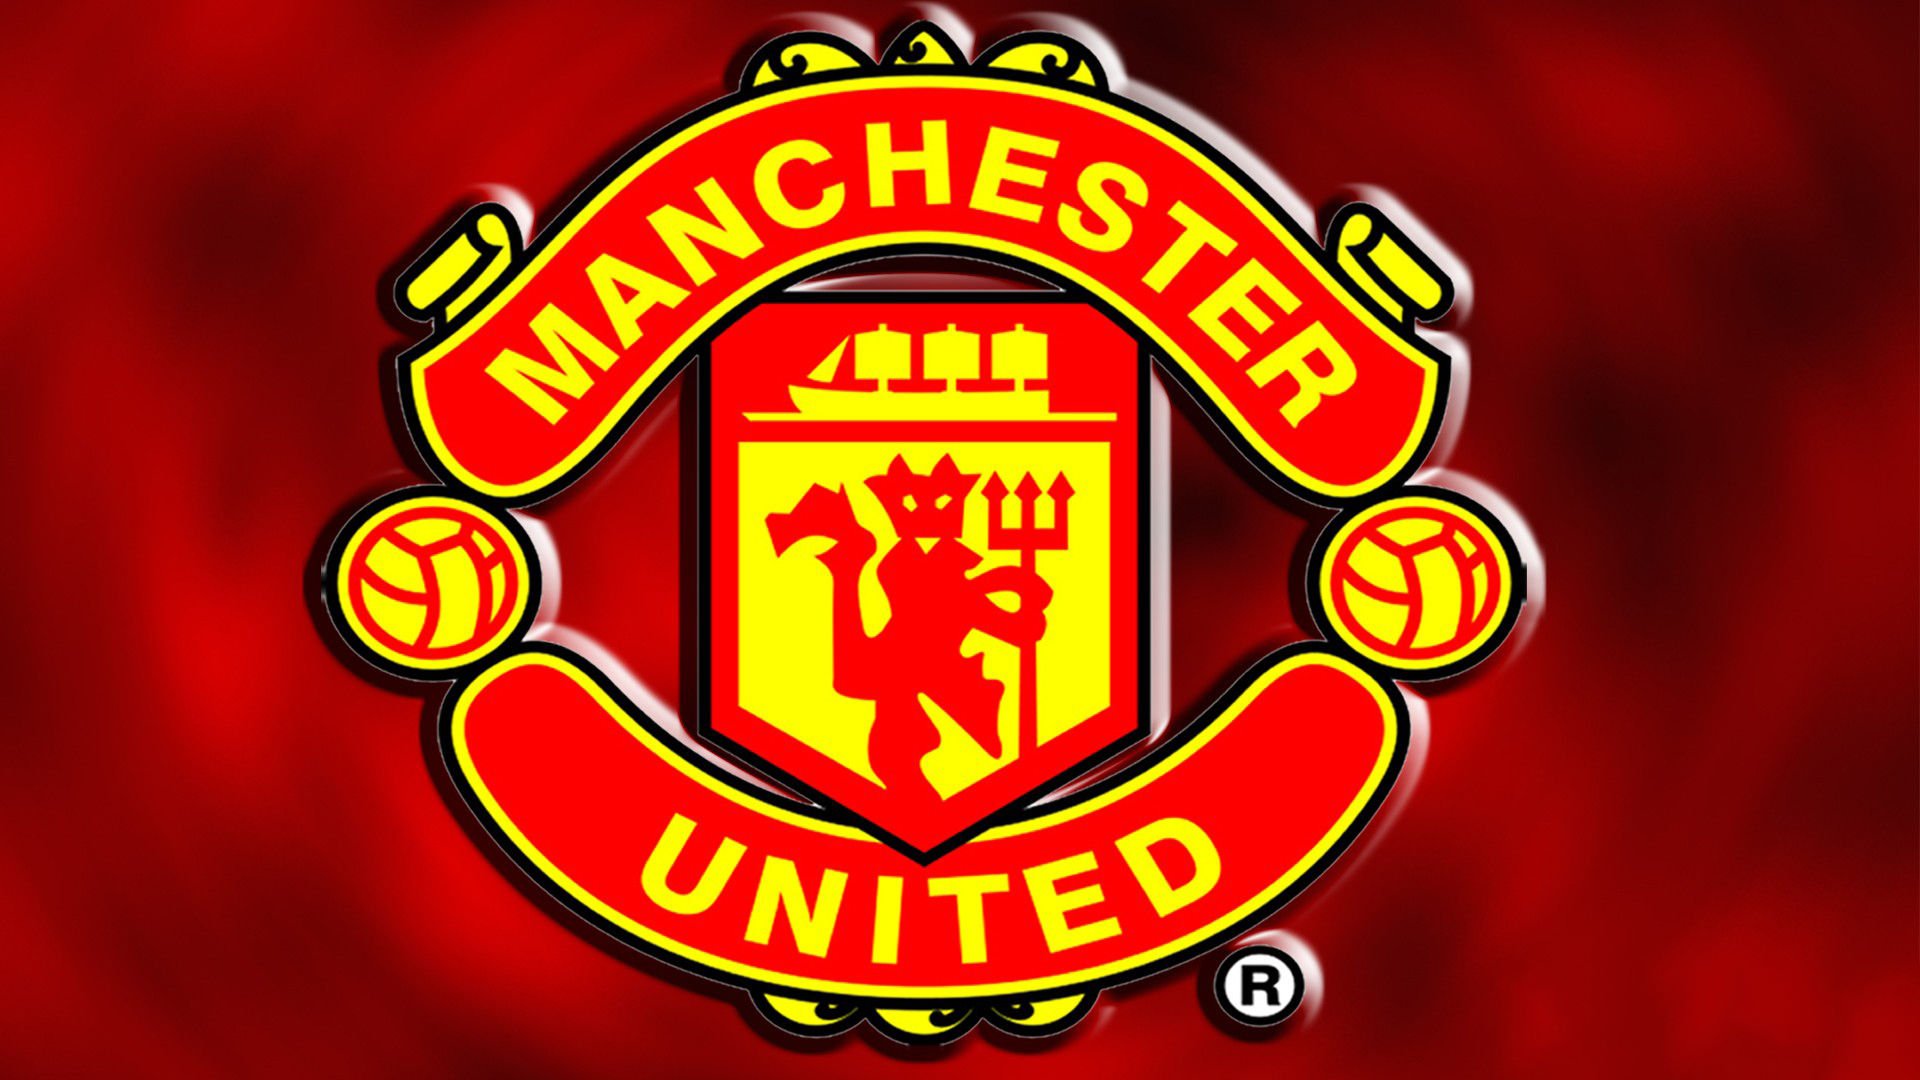 М ю ти. ФК Манчестер Юнайтед эмблема. Герб ман Юнайтед. Манчестер футбольный клуб логотип. Манчестер Юнайтед герб клуба.